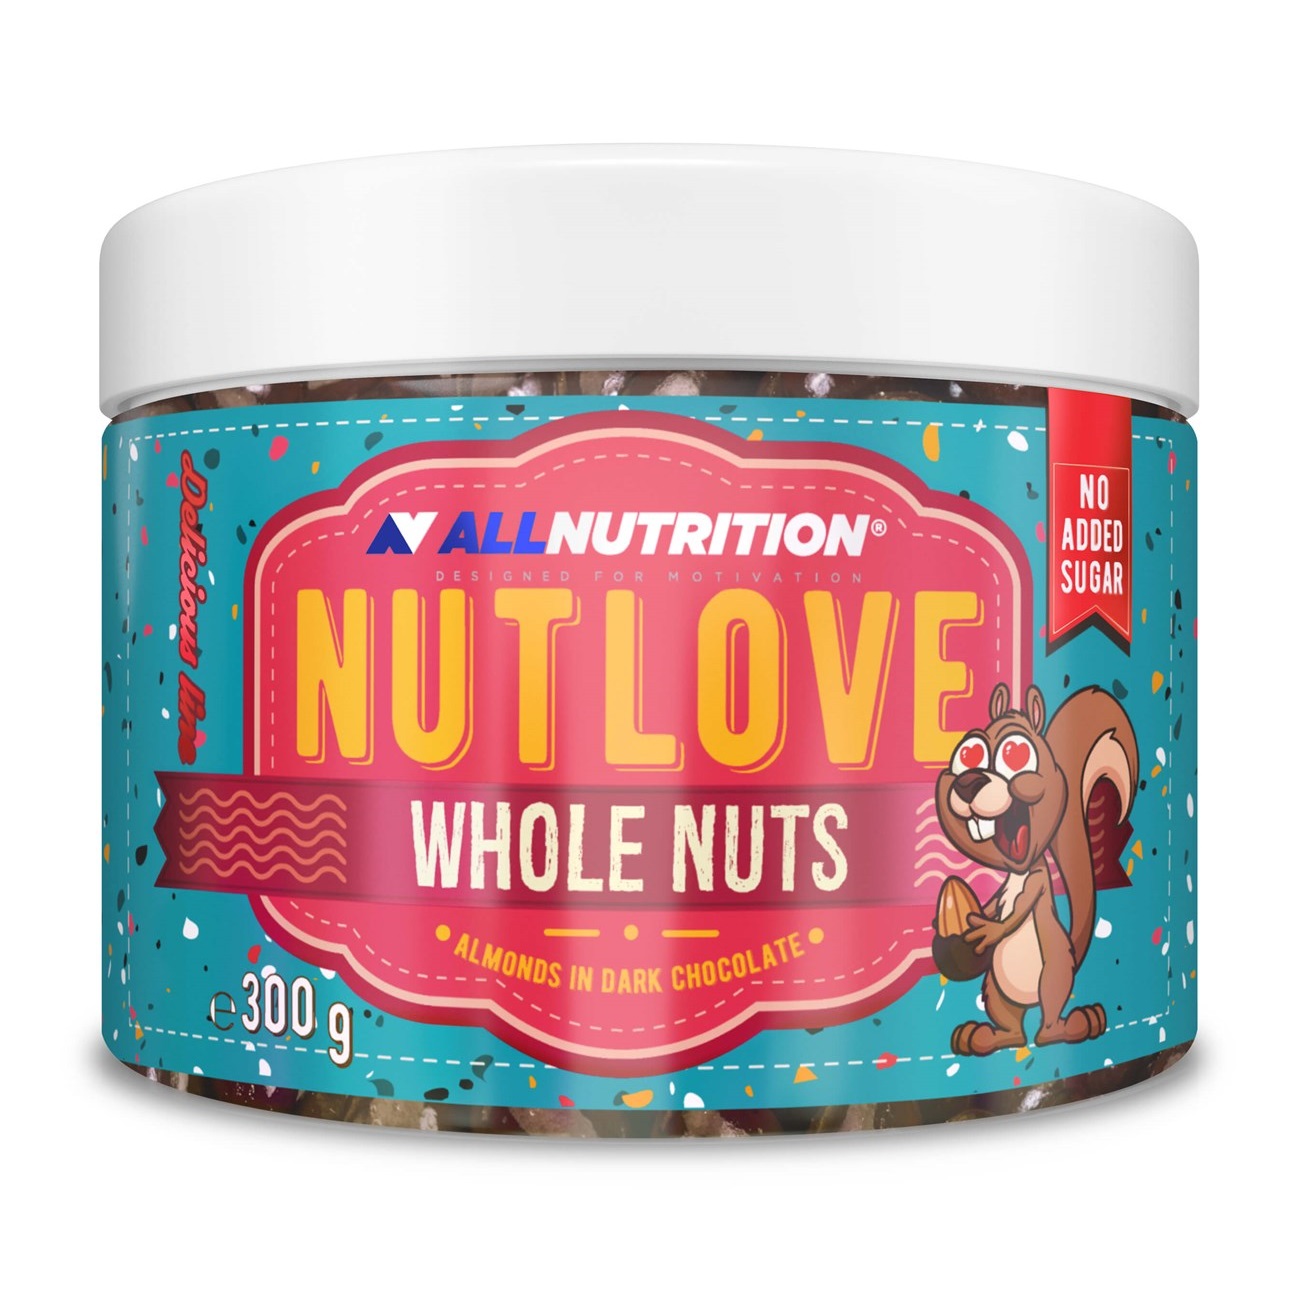 Nutlove Whole Nuts (bademi u tamnoj čokoladi) - 300 g